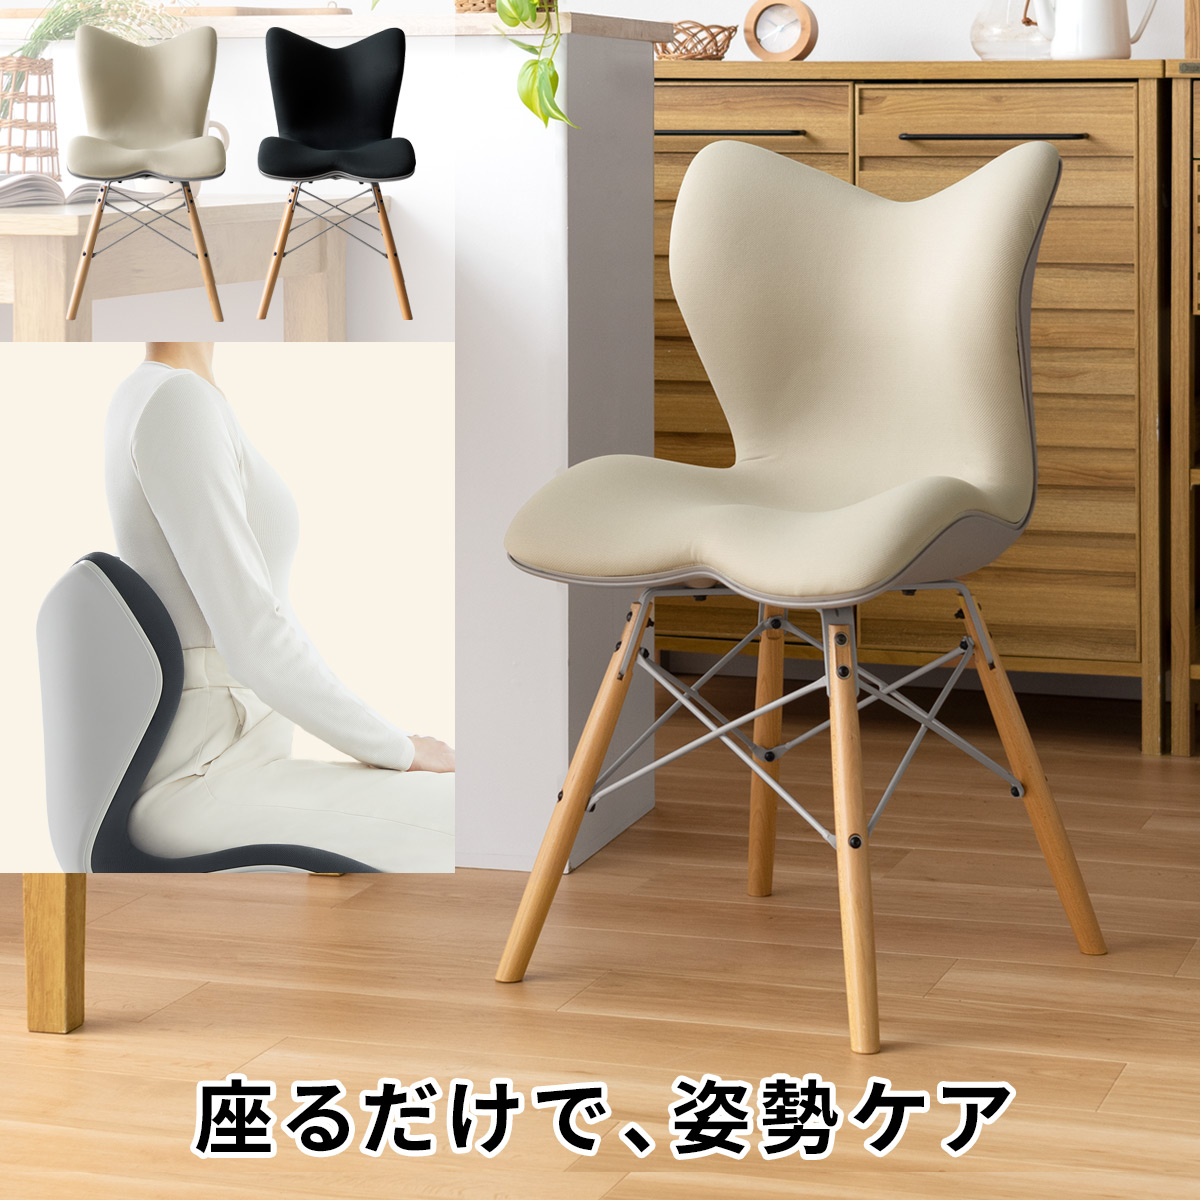 Style Chair PM(ピーエム) | 【公式】 エア・リゾーム インテリア